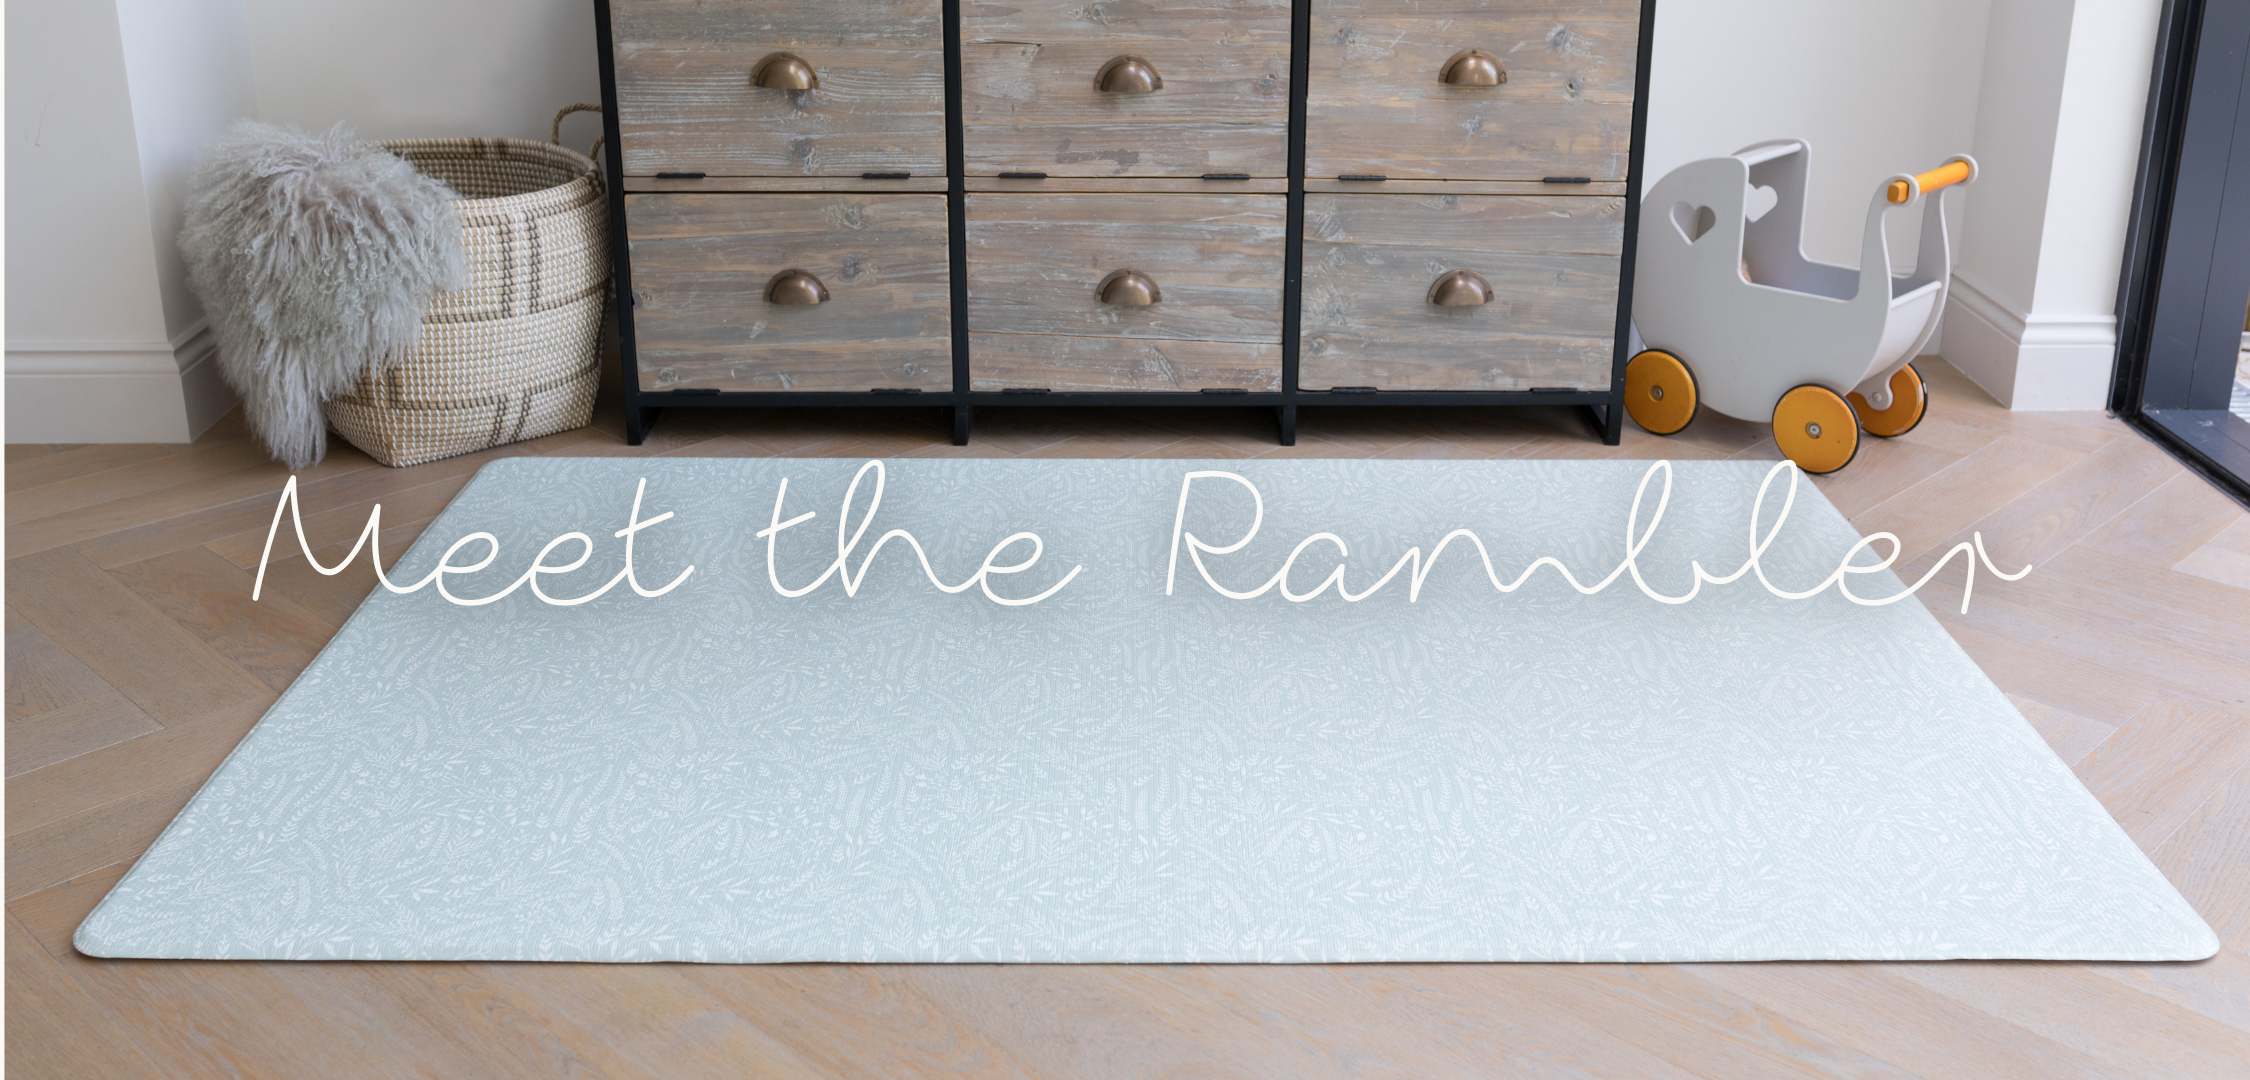 The Rambler meet the playmat blog totter and tumble header image